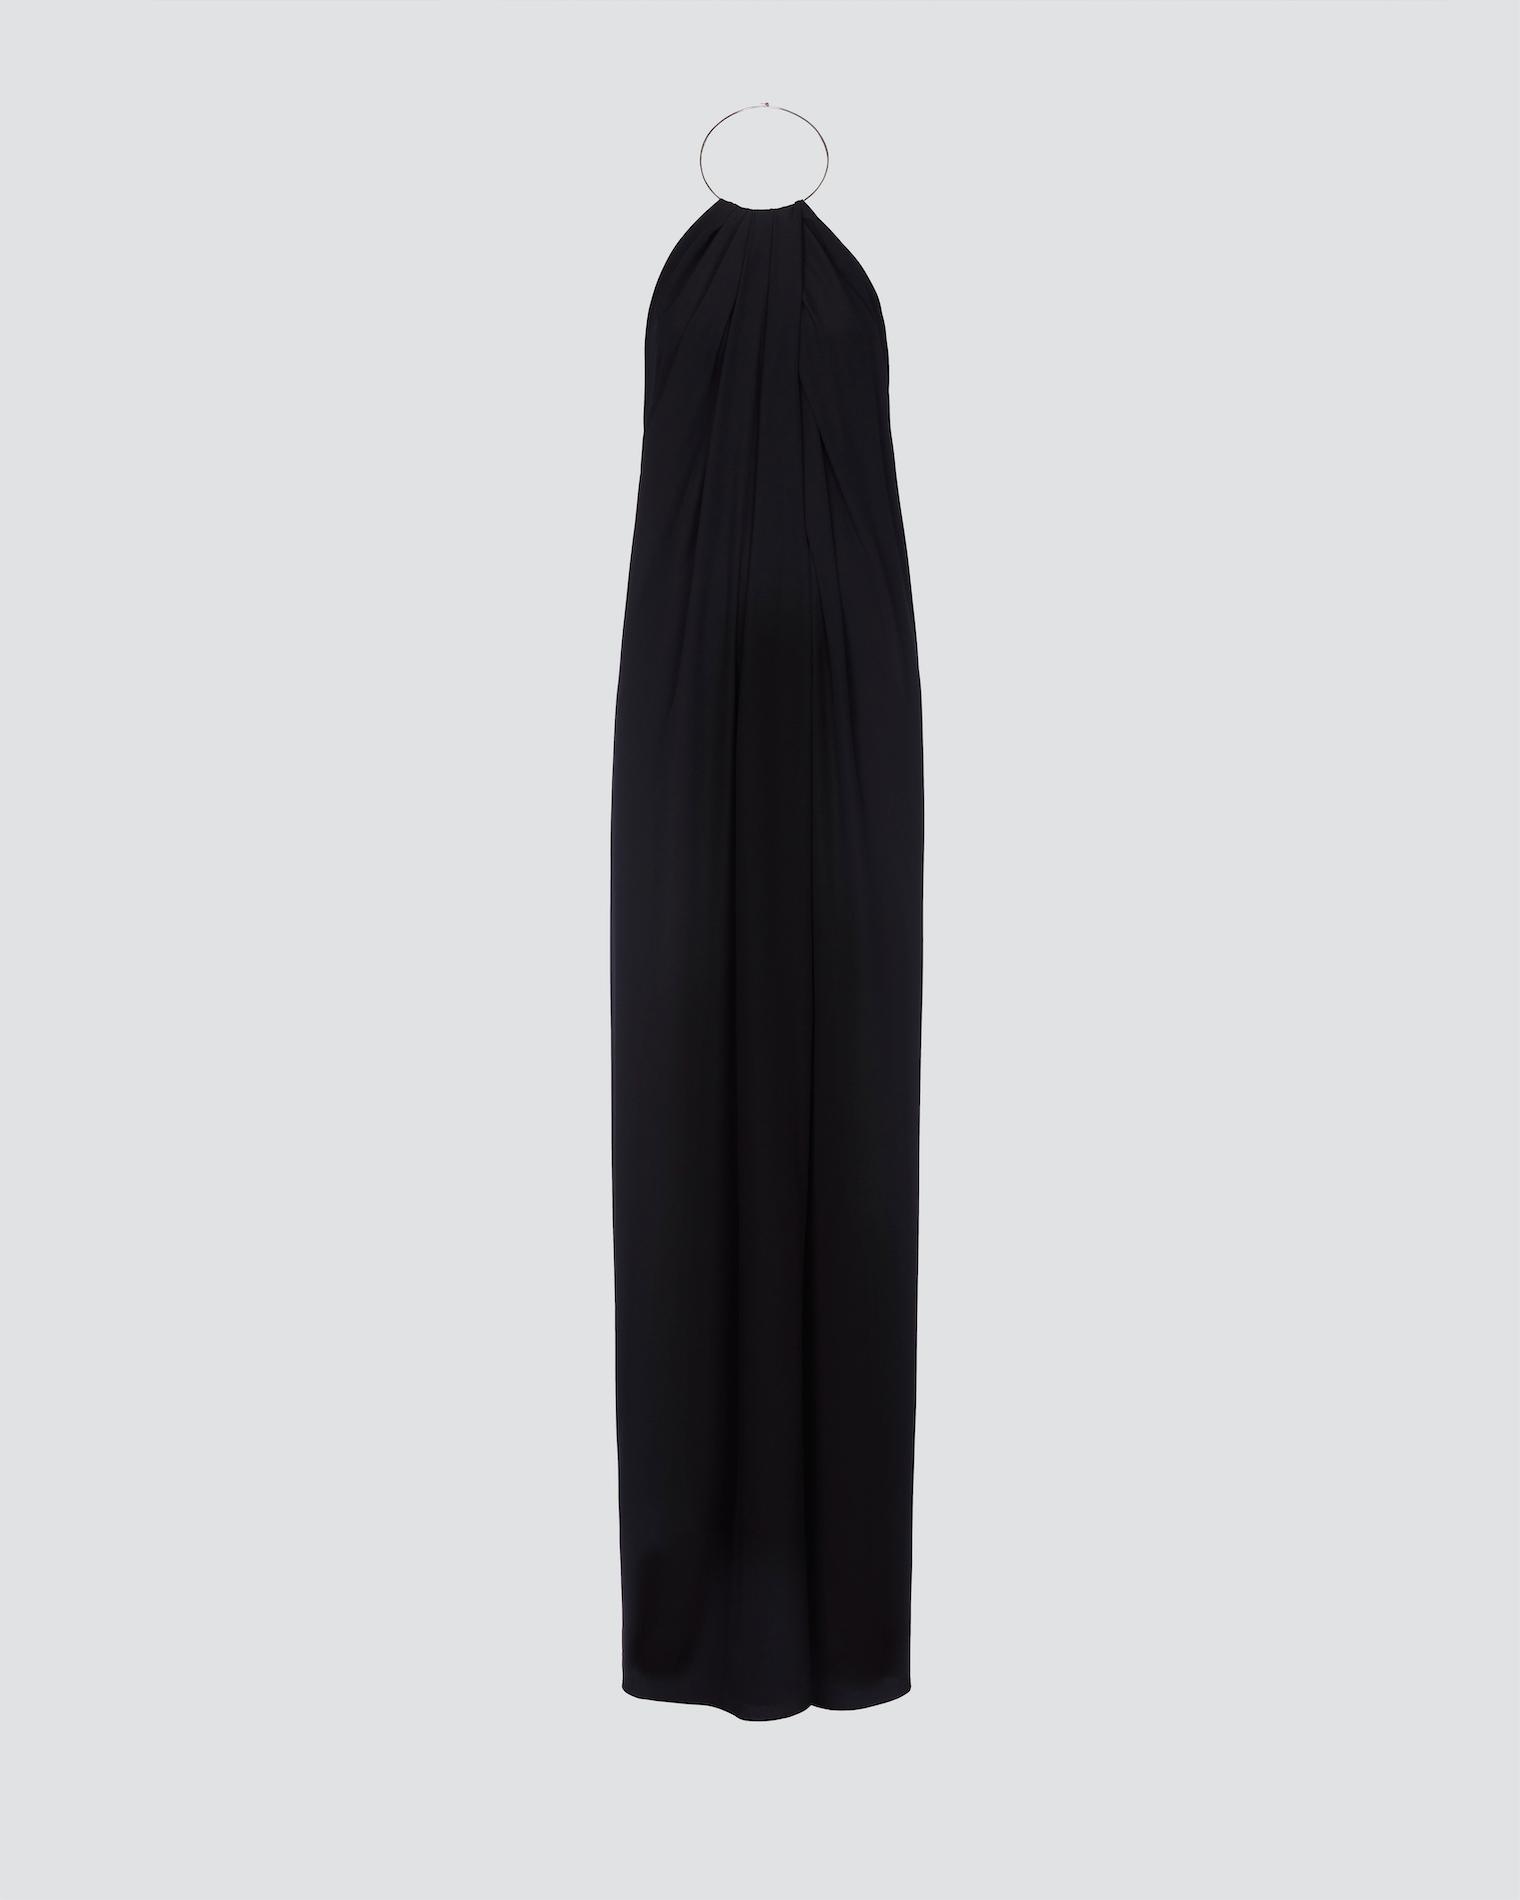 Silk halter dress